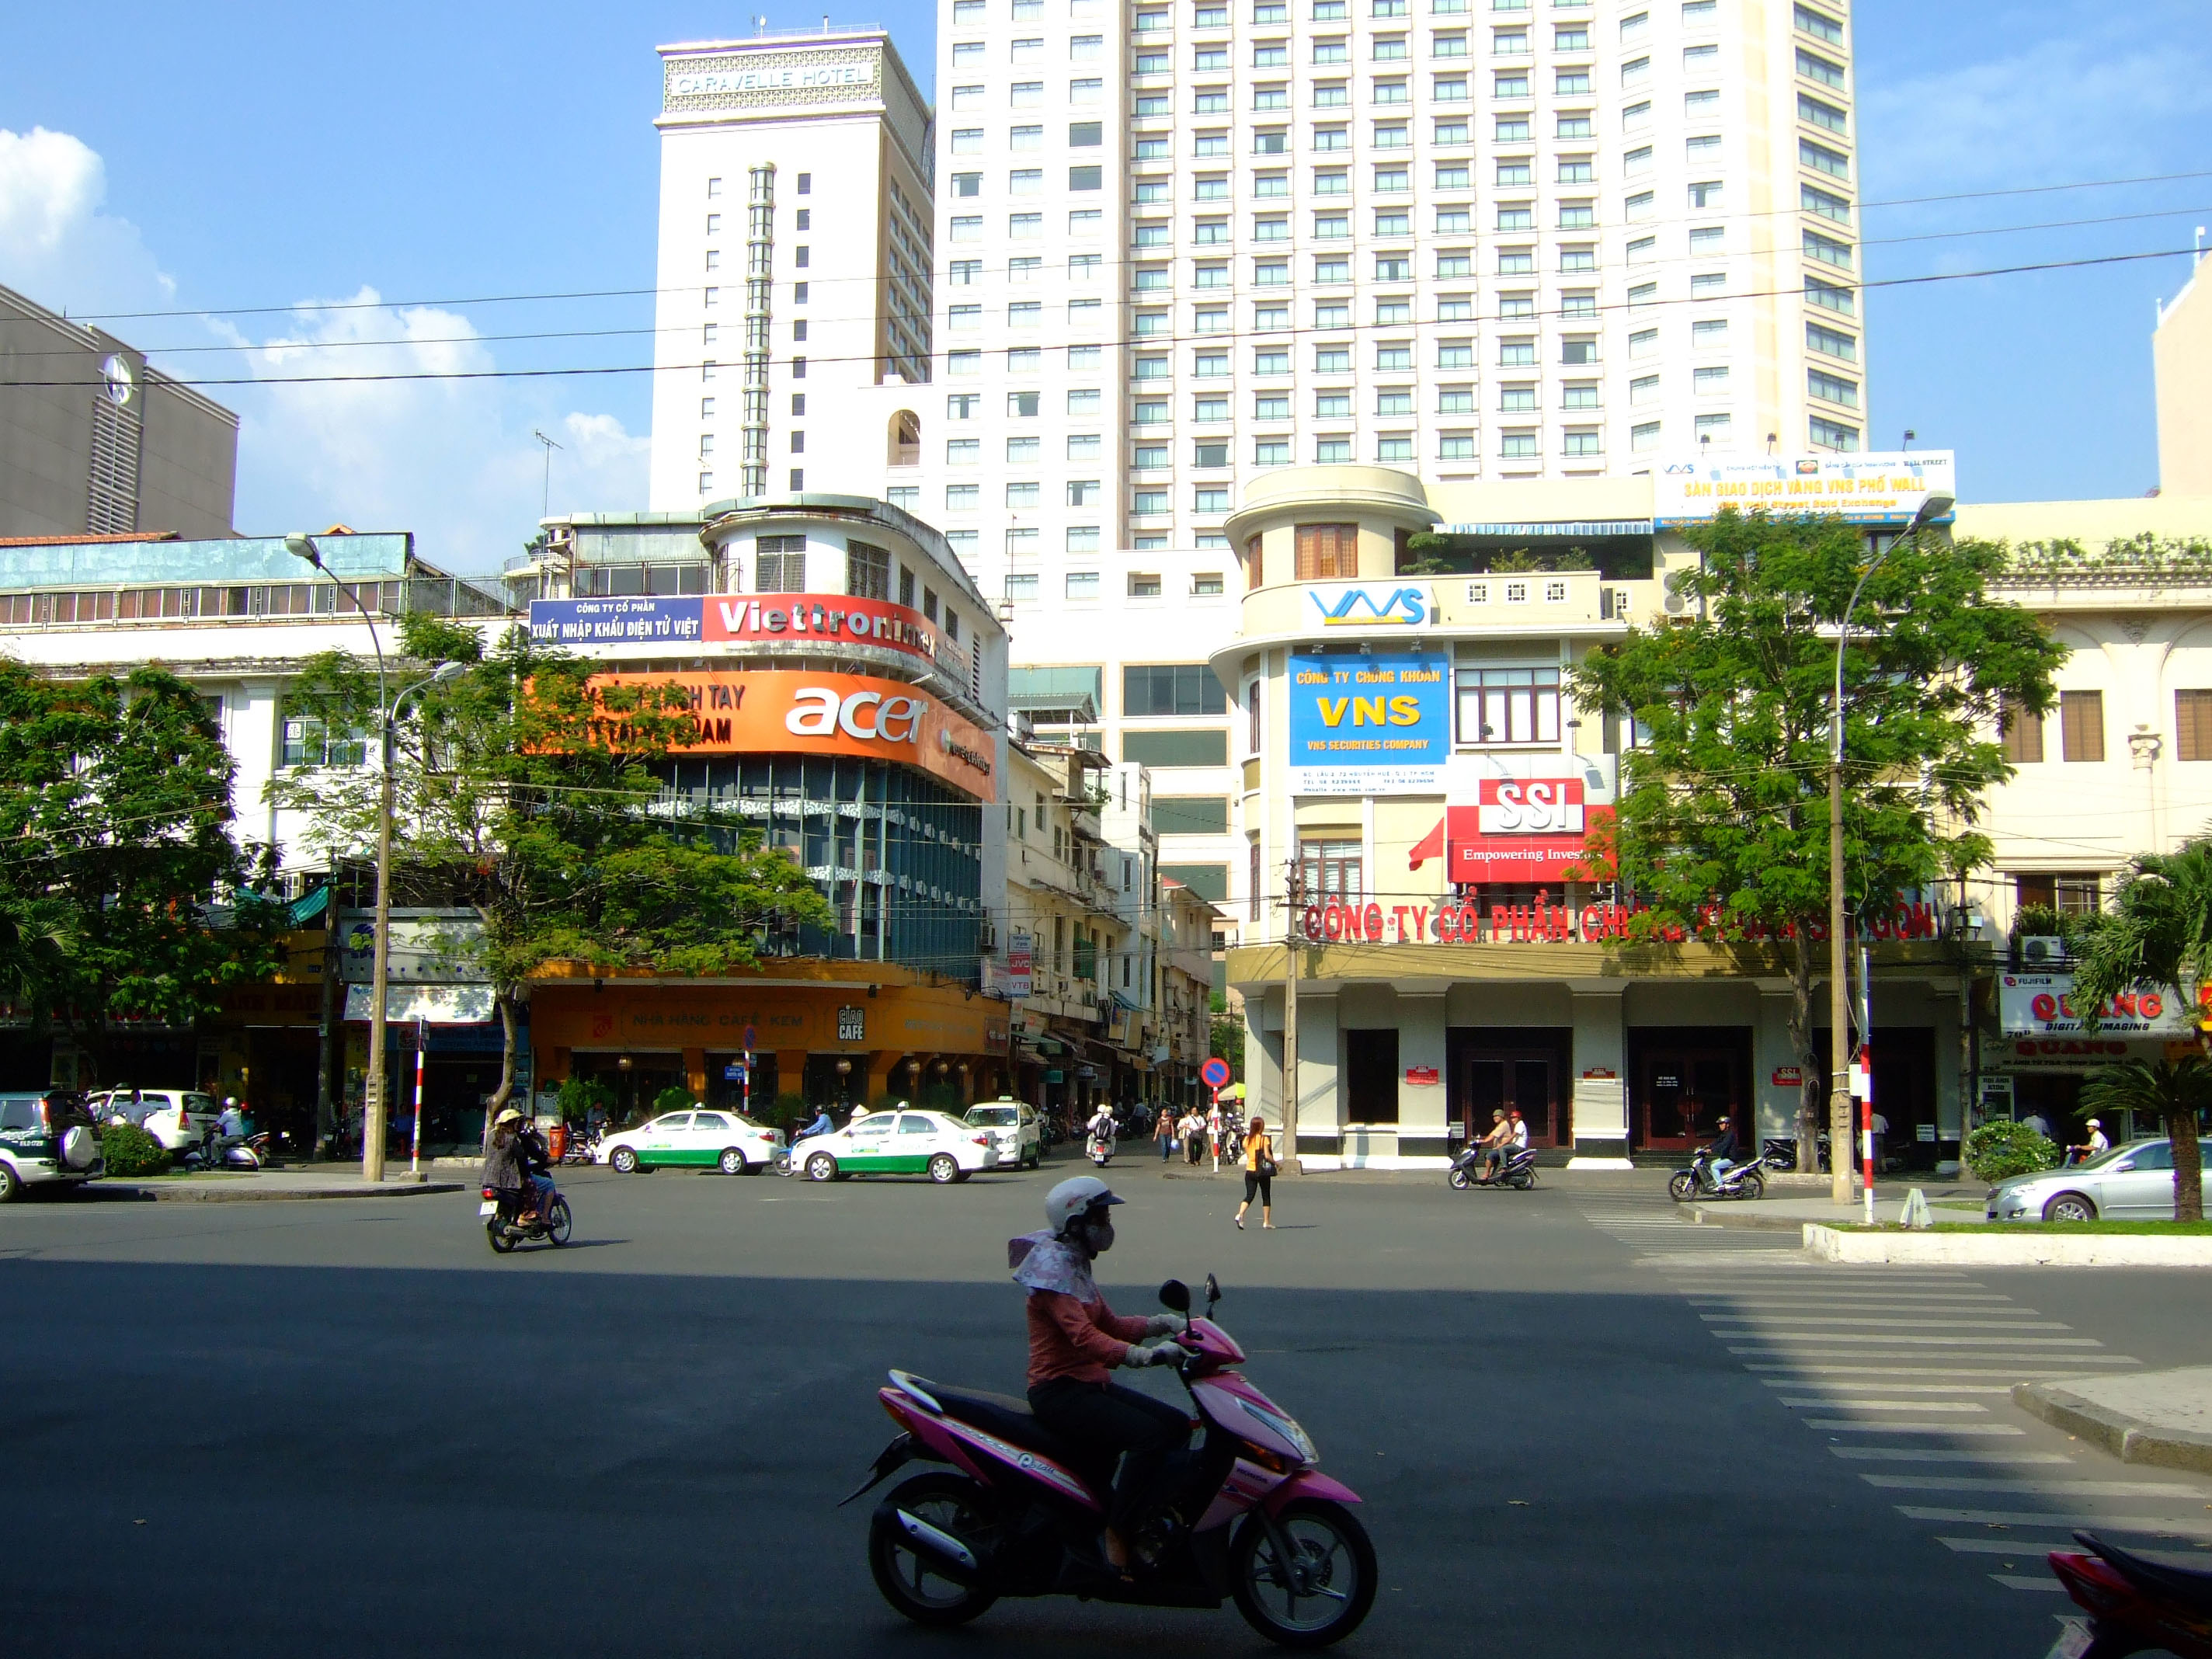 Vietnam Ho Chi Minh Caravelle Hotel and Sheraton Hotel Saigon Feb 2009 04